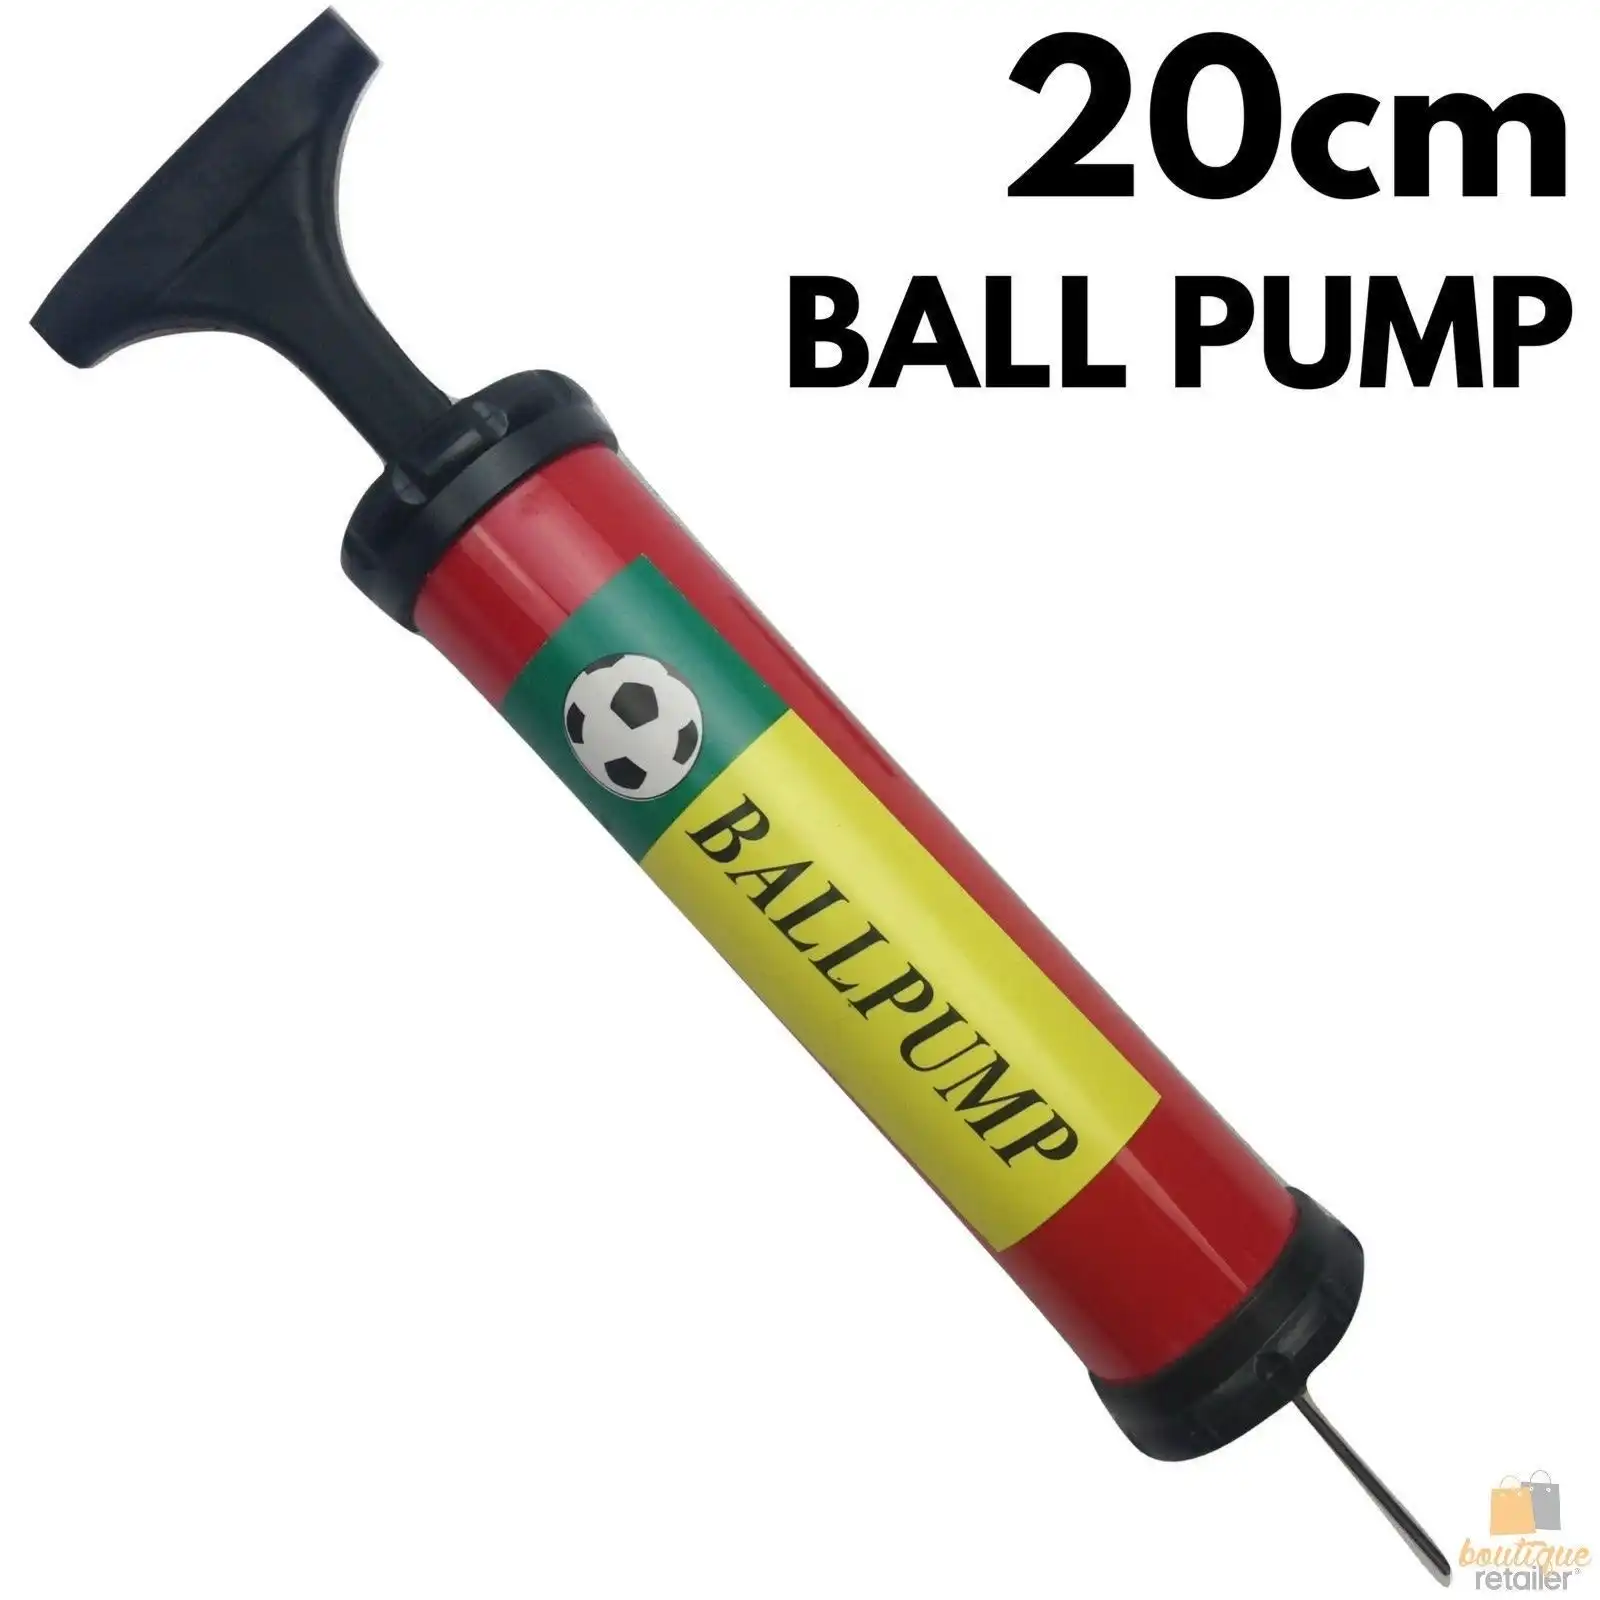 BALL PUMP Air Inflator Soccer Basketball Football Needle Yoga Fitness Portable